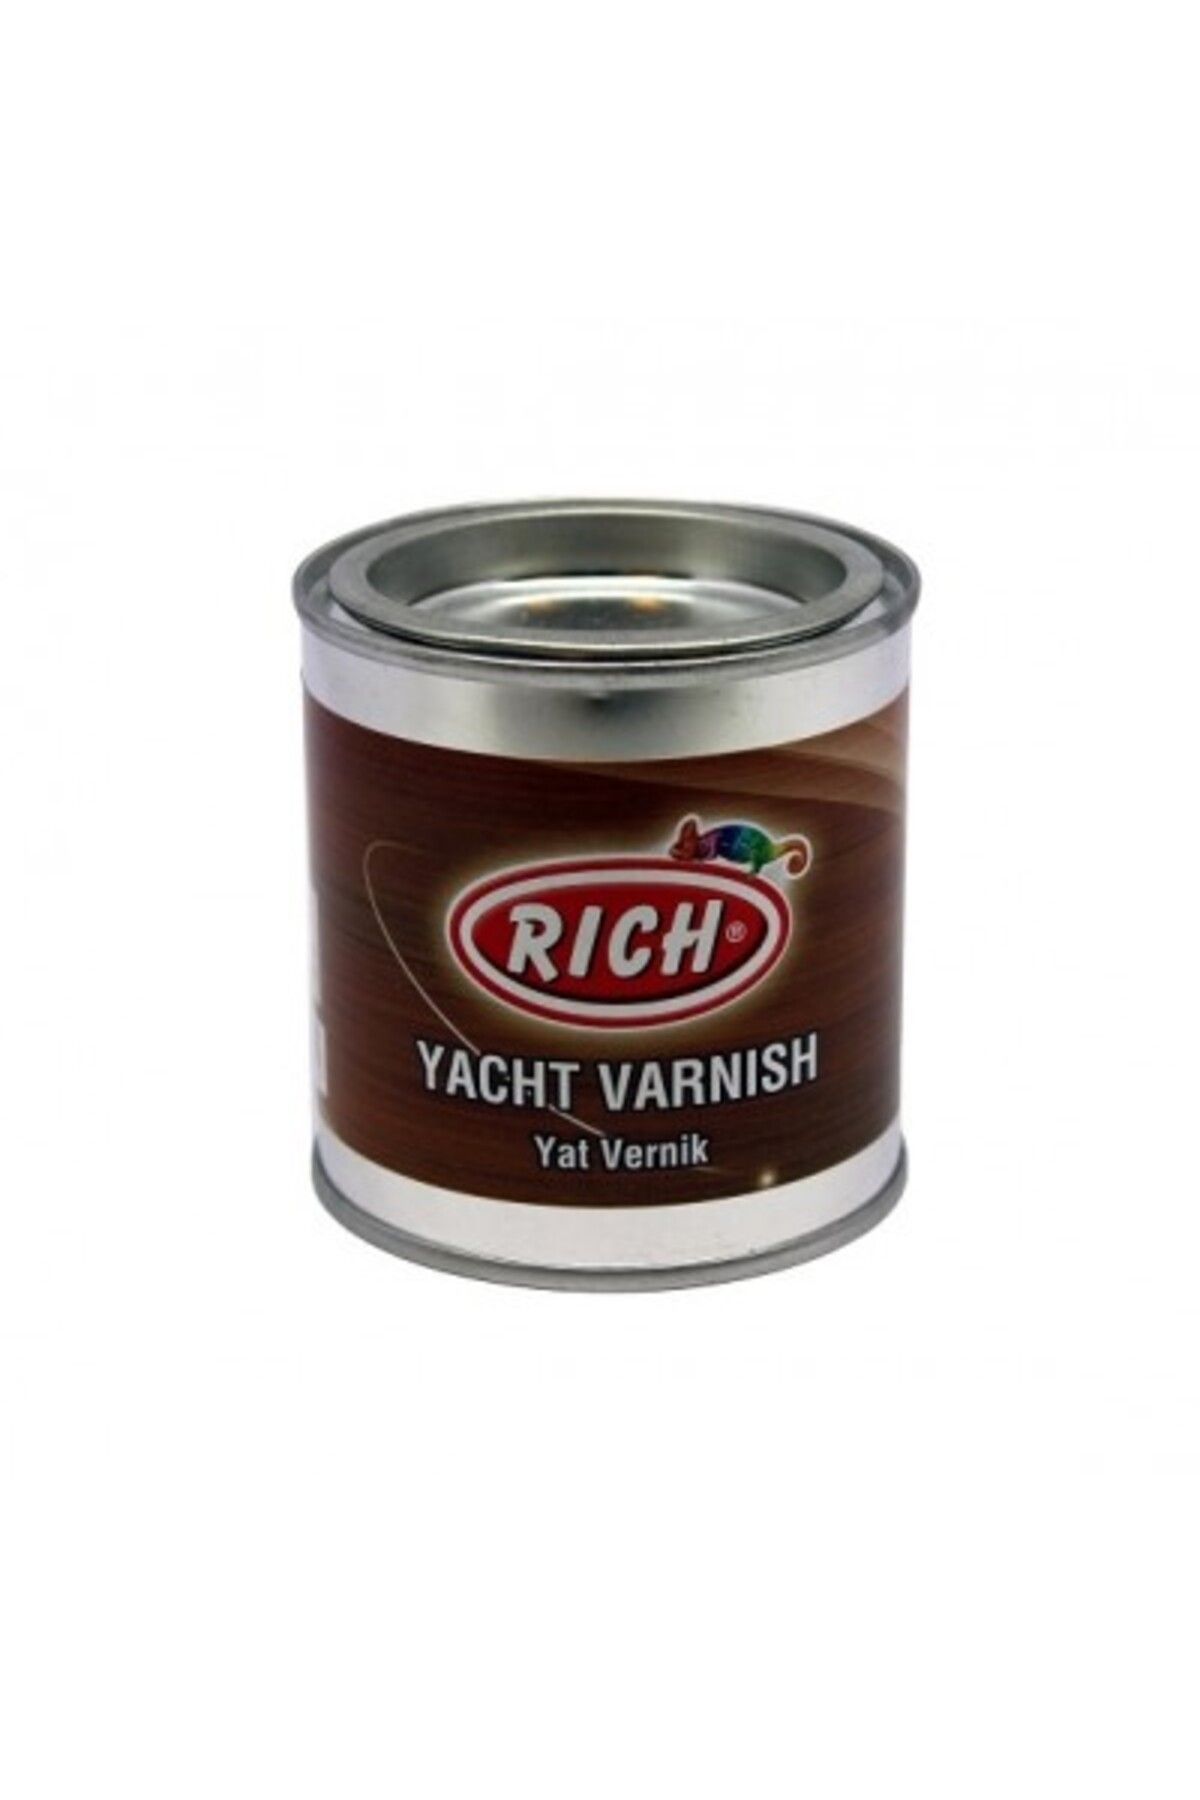 Rich Yacth Varnish 250cc Yat Vernik / 04661